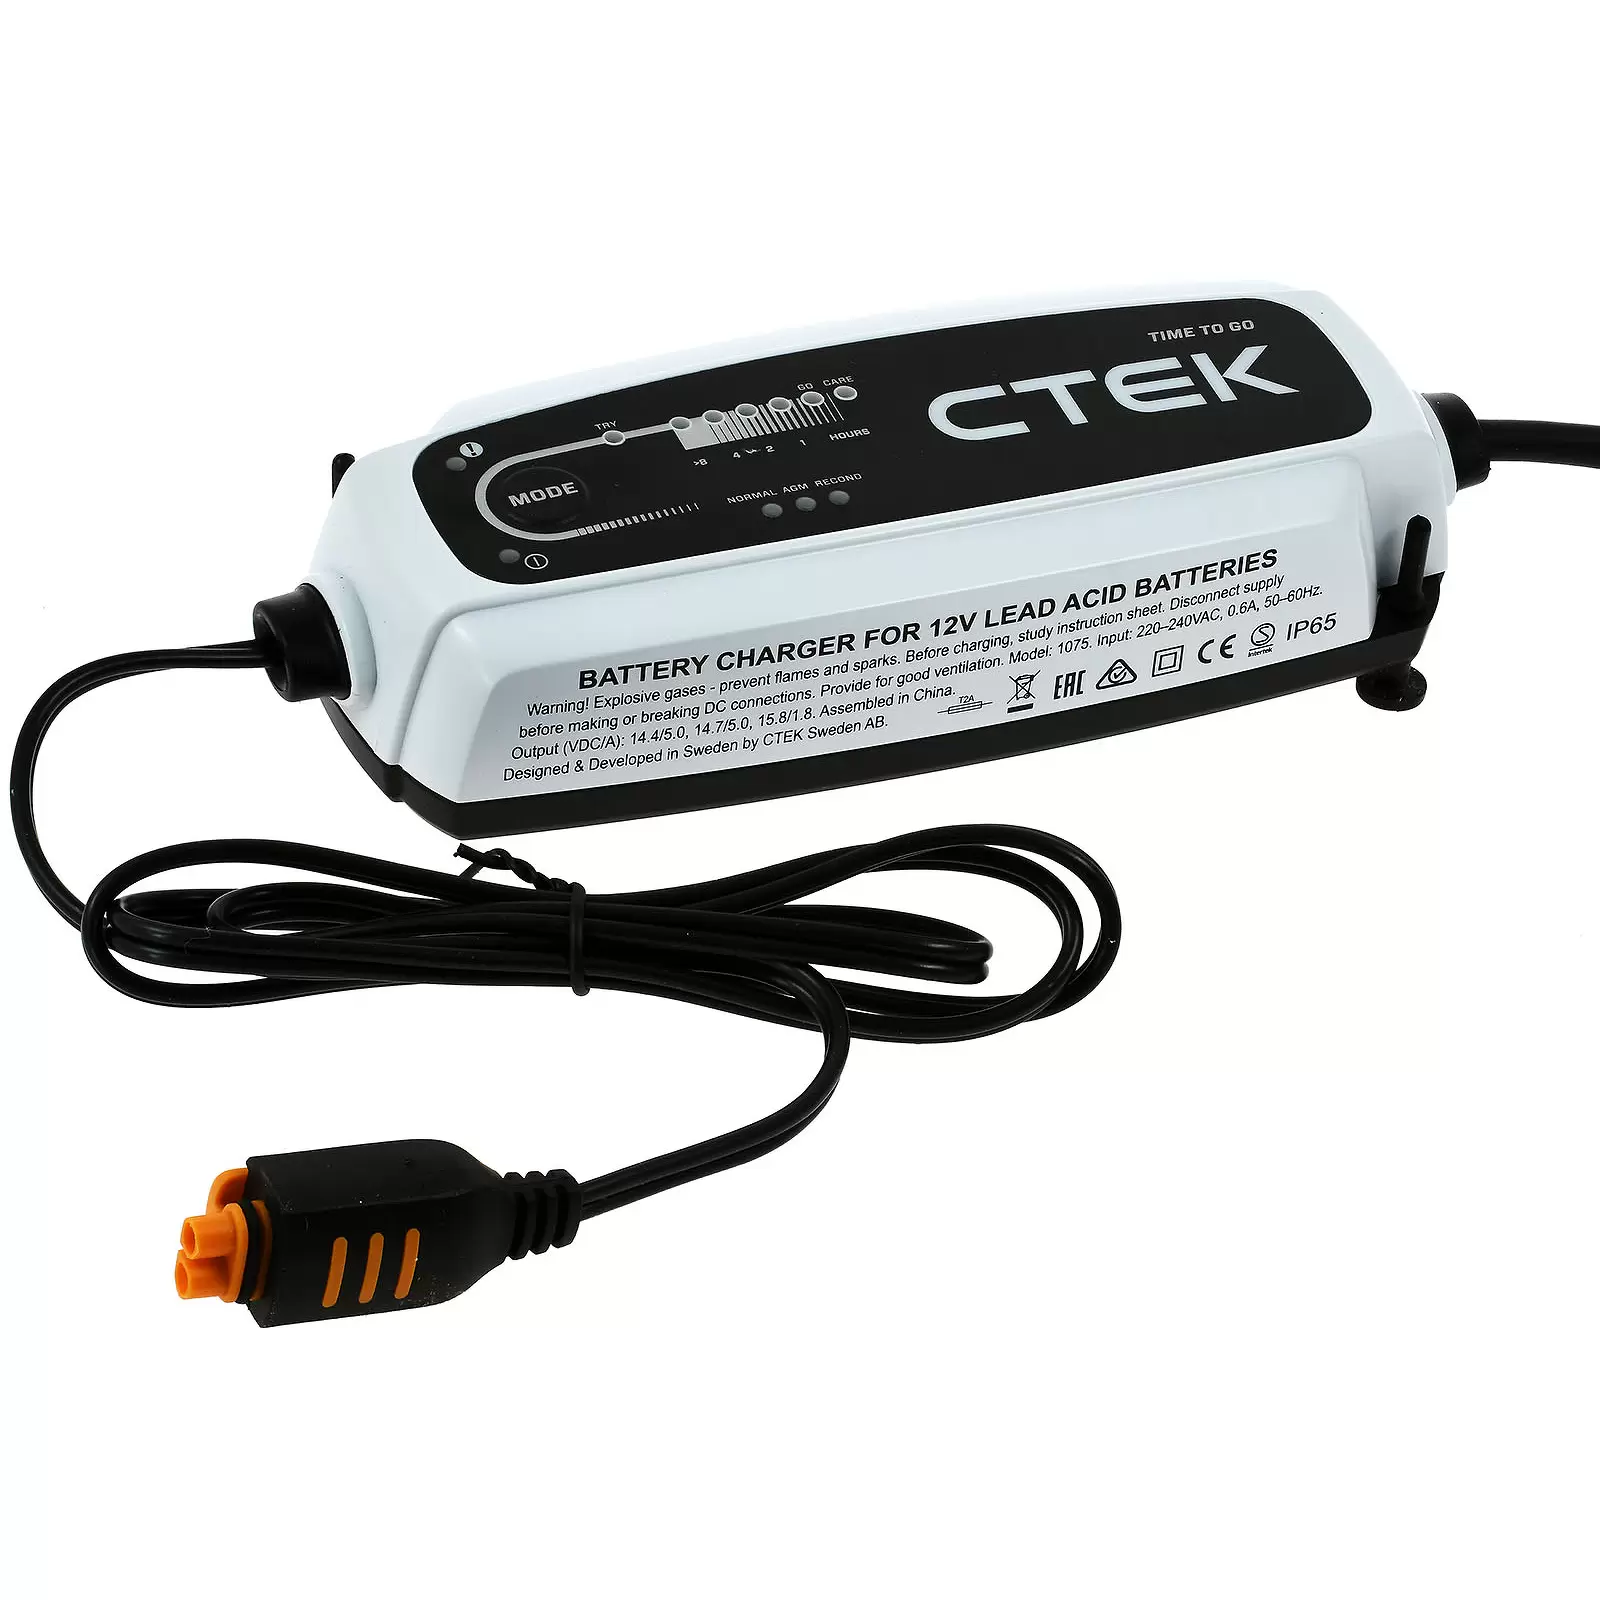 CTEK CT5 Time to Go, Batterie-Ladegerät, mit Countdown-Display 12V 5A EU-Stecker